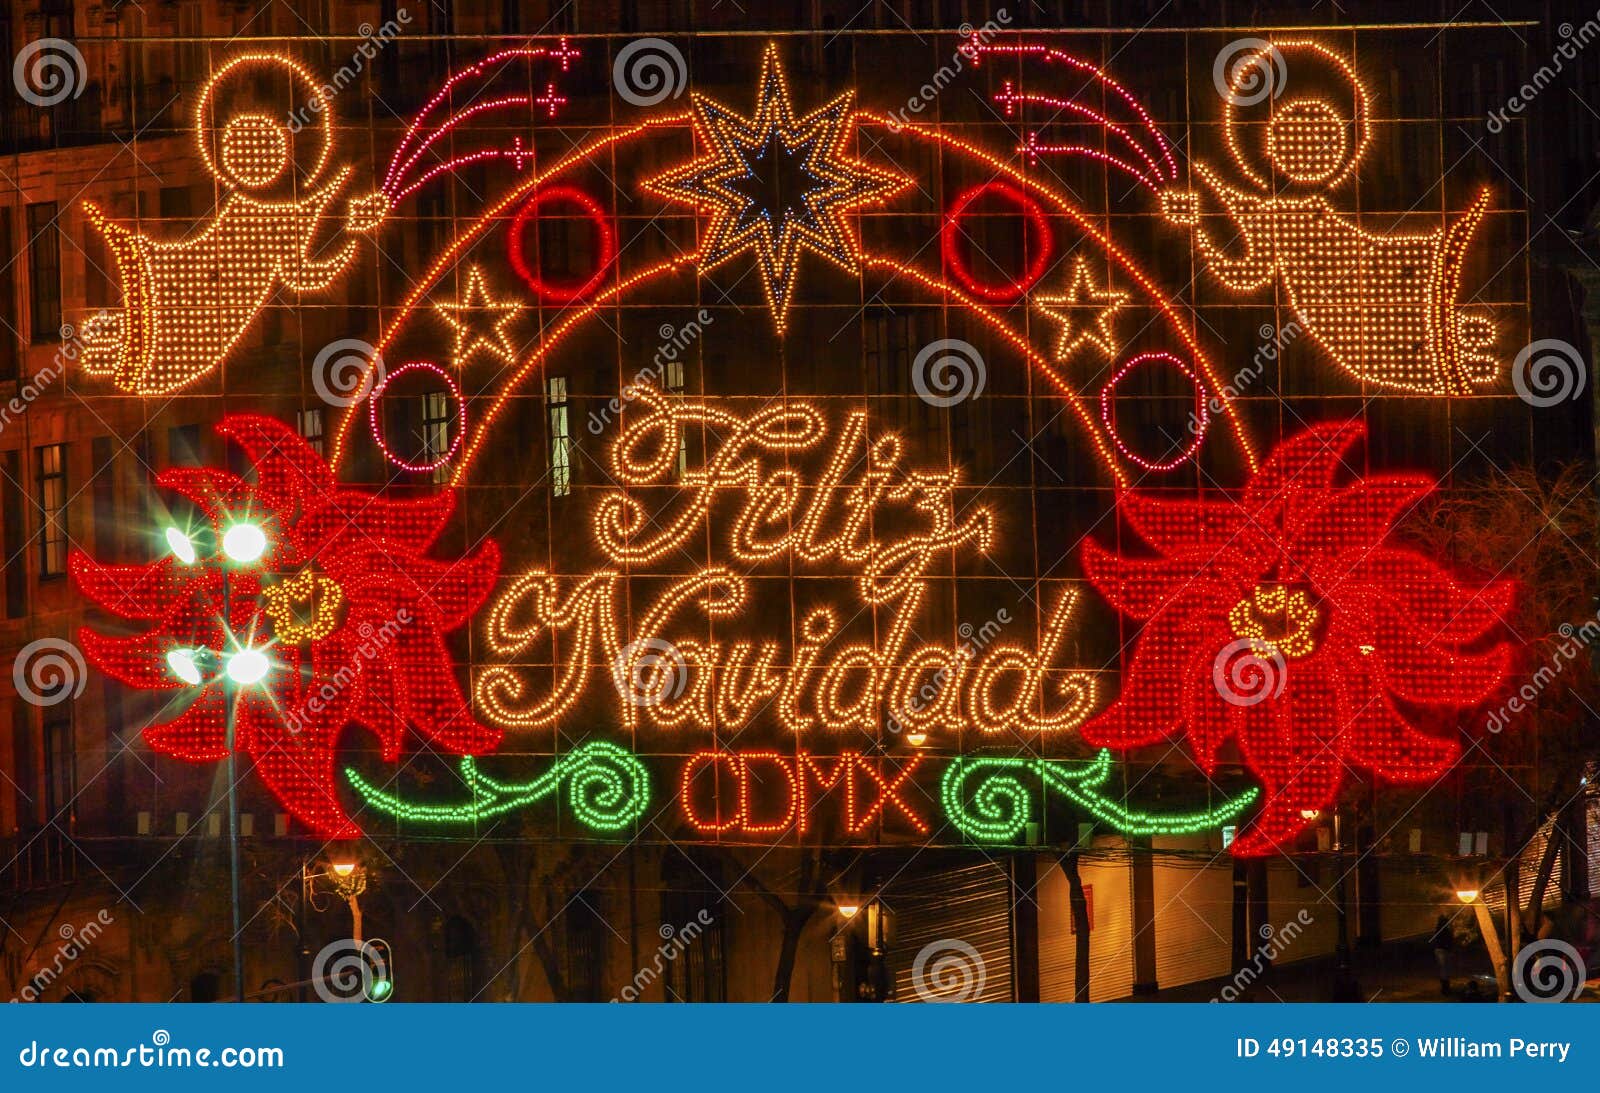 mexico city zocalo mexico christmas night feliz navidad sign